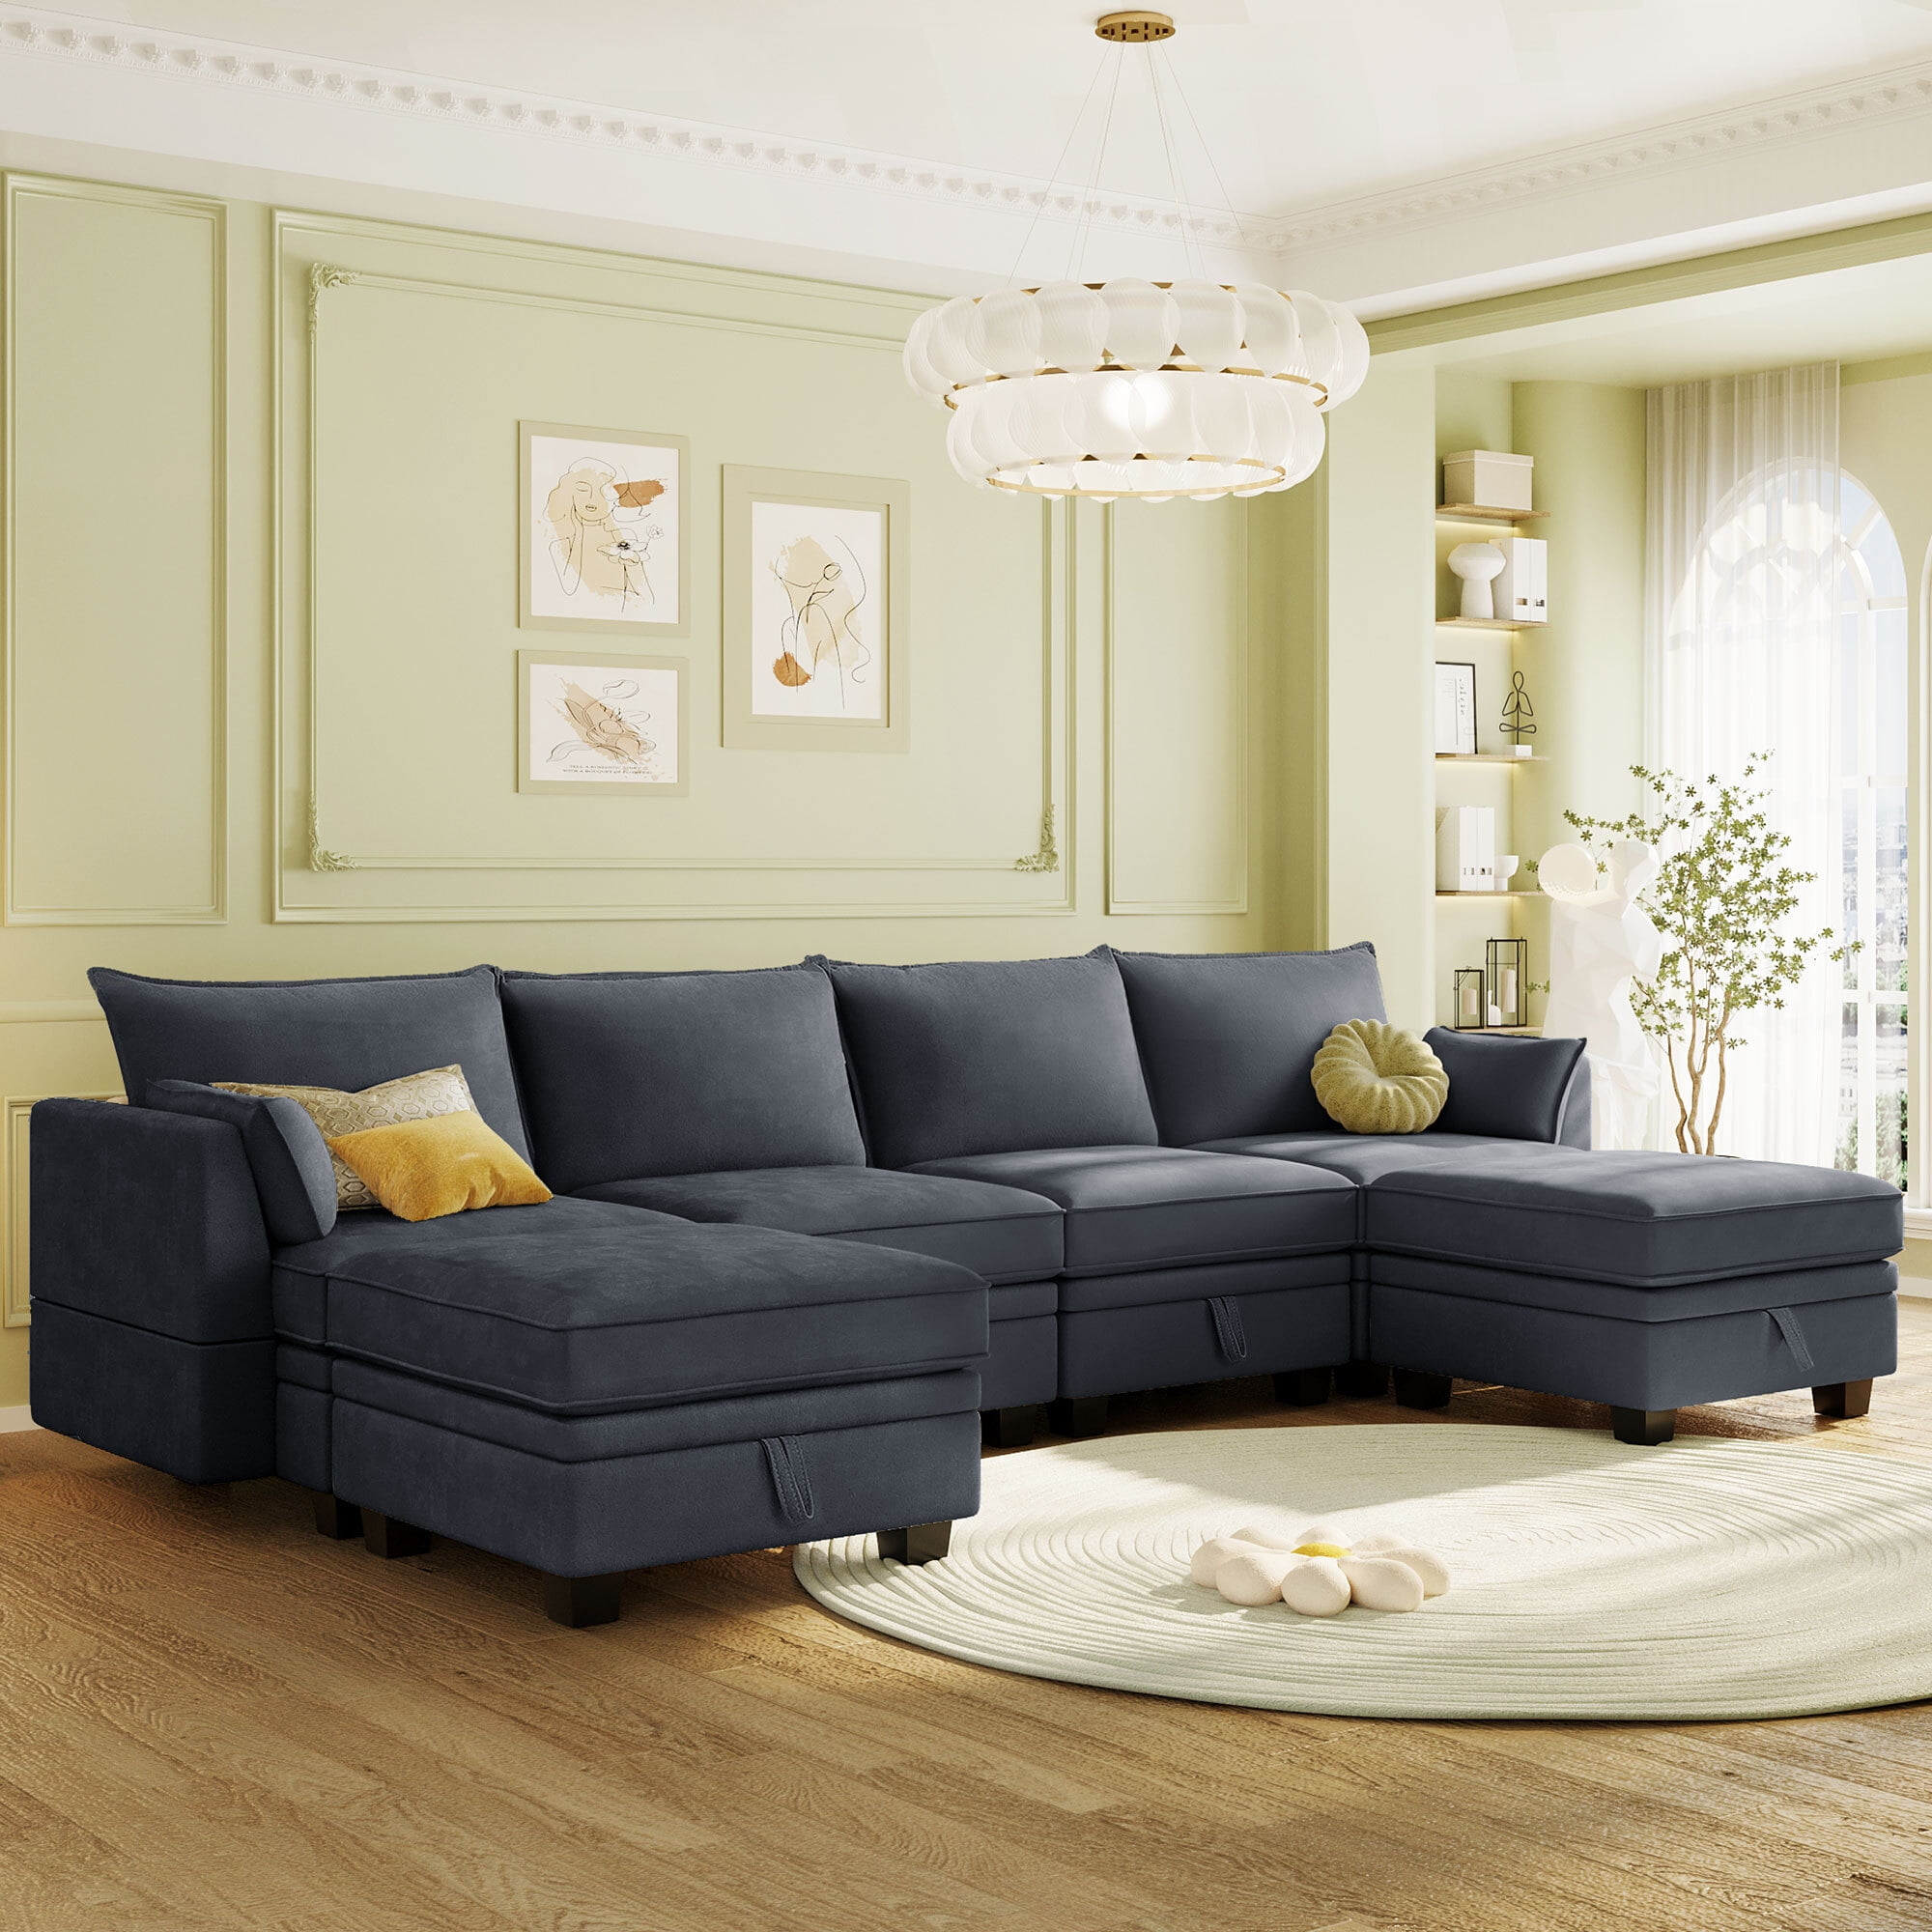 Euroco Large U Shaped Sectional Sofa 6